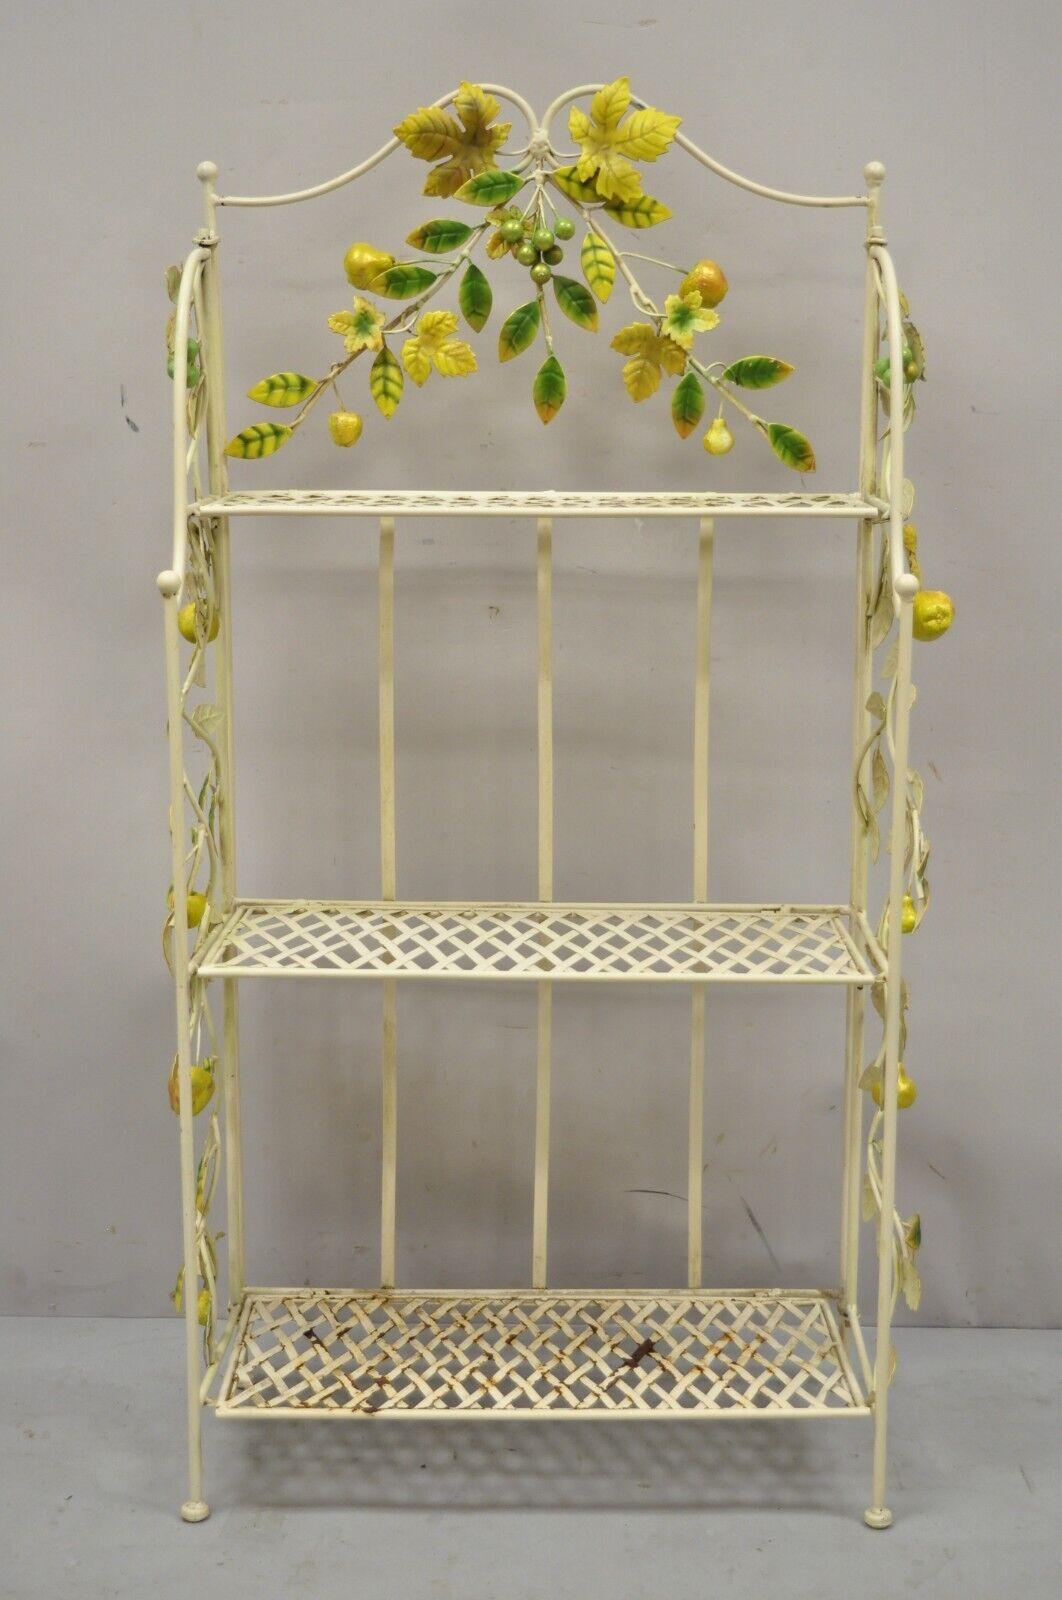 Vintage Italian Hollywood Regency iron tole metal yellow lemon shelf stand. folding metal frame, yellow fruit (lemons), very nice vintage item. Circa mid 20th Century.
Measurements: 
Open: 47